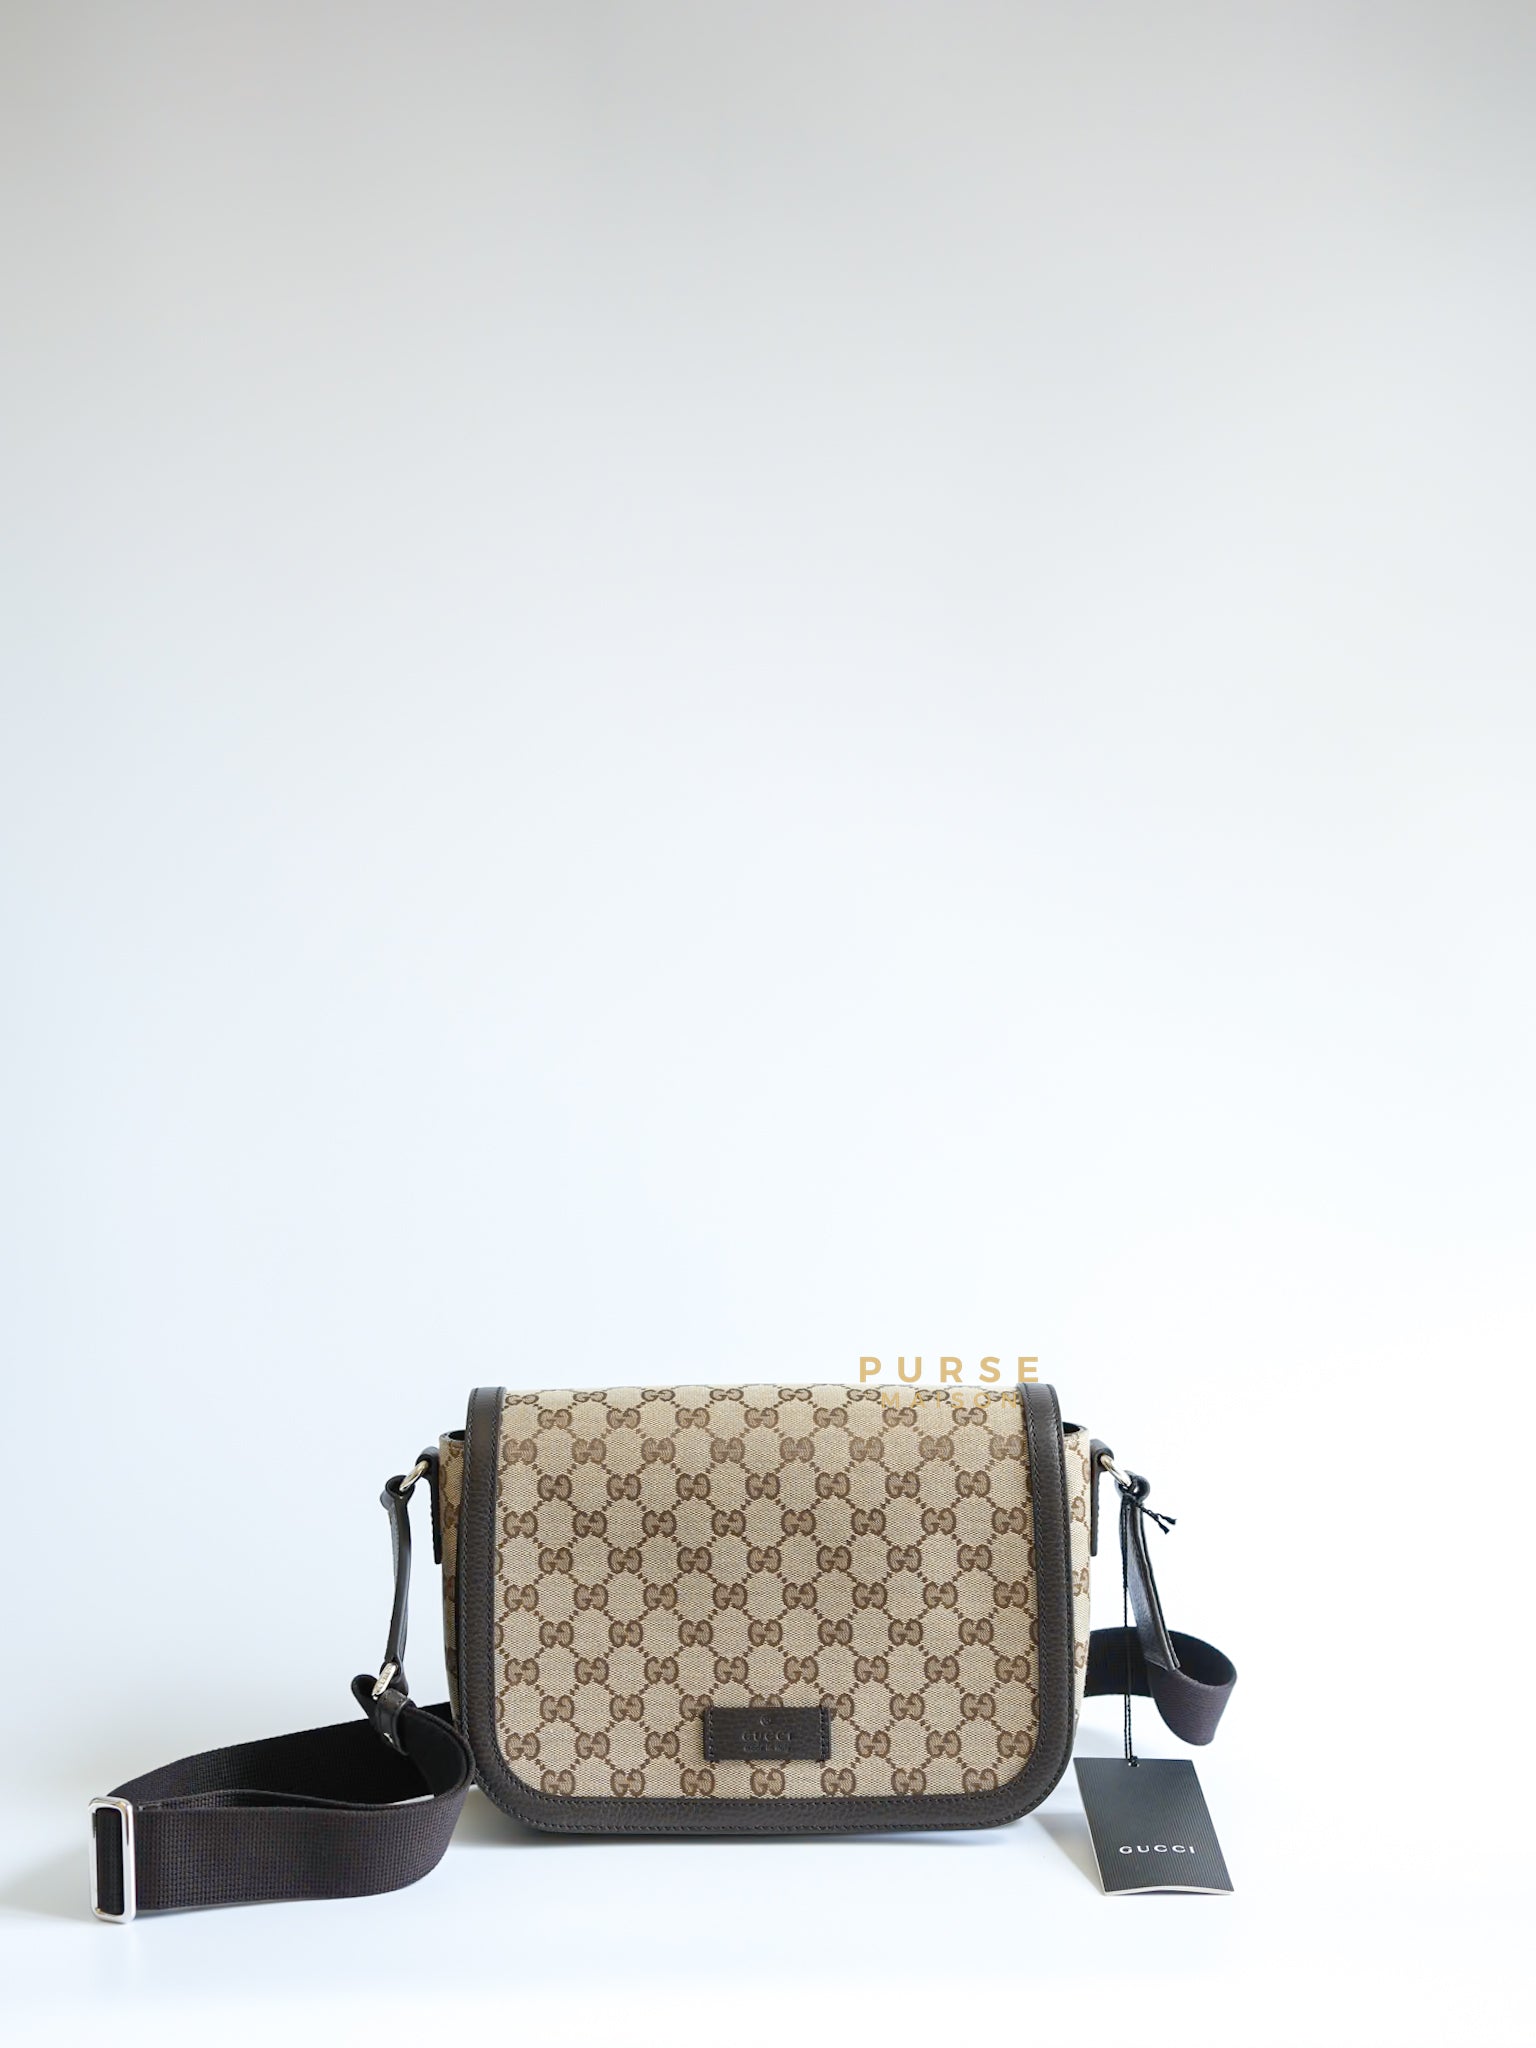 GG Beige Brown Guccissima Messenger Bag | Purse Maison Luxury Bags Shop